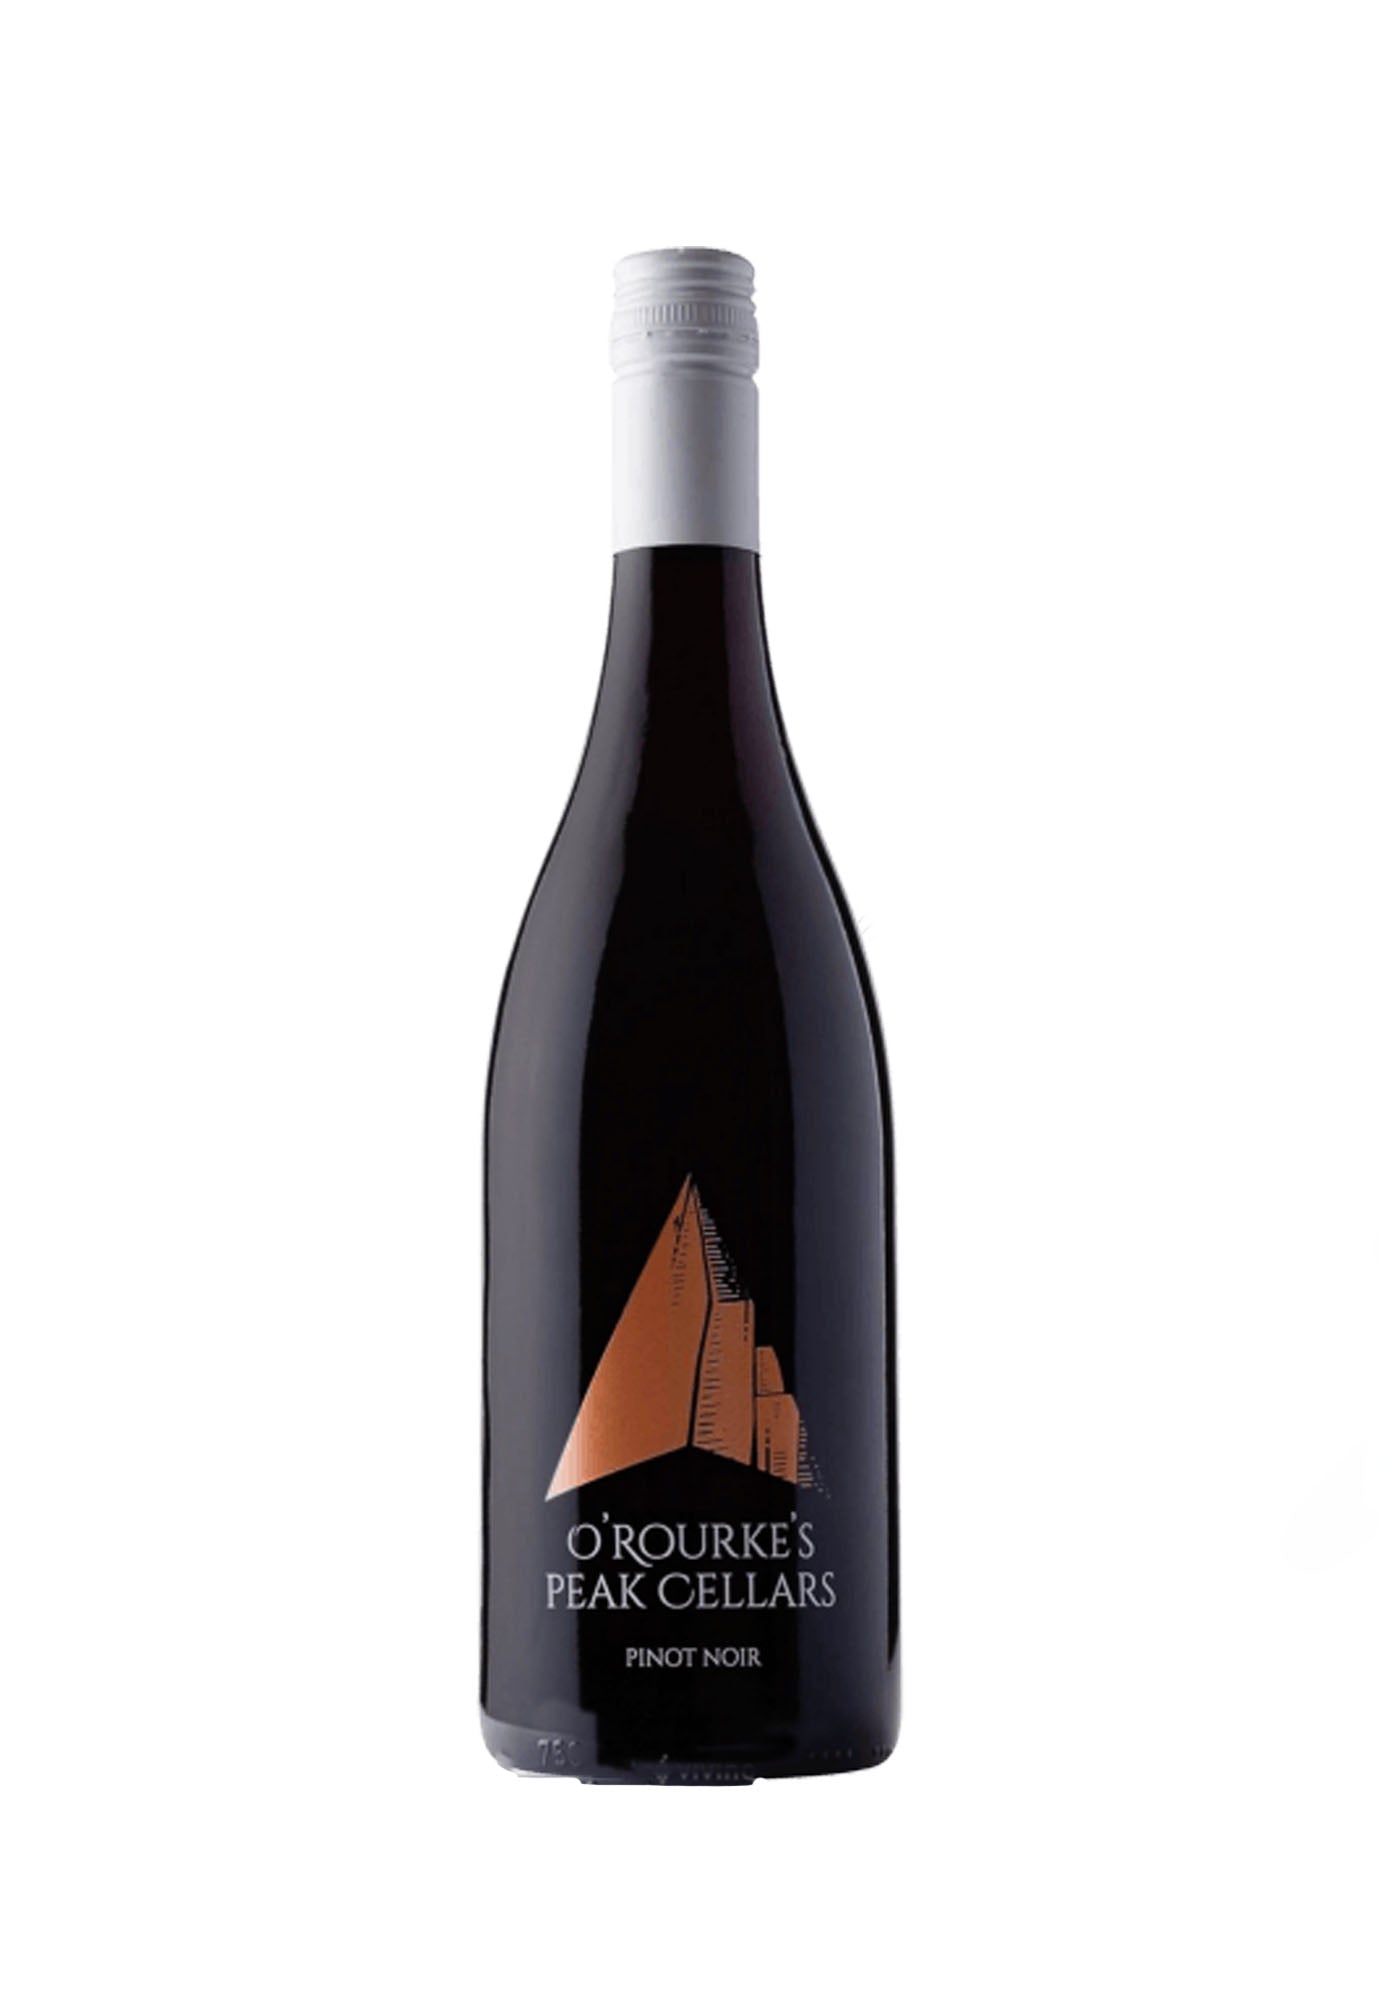 O'Rourke's Peak Cellars Pinot Noir 2019